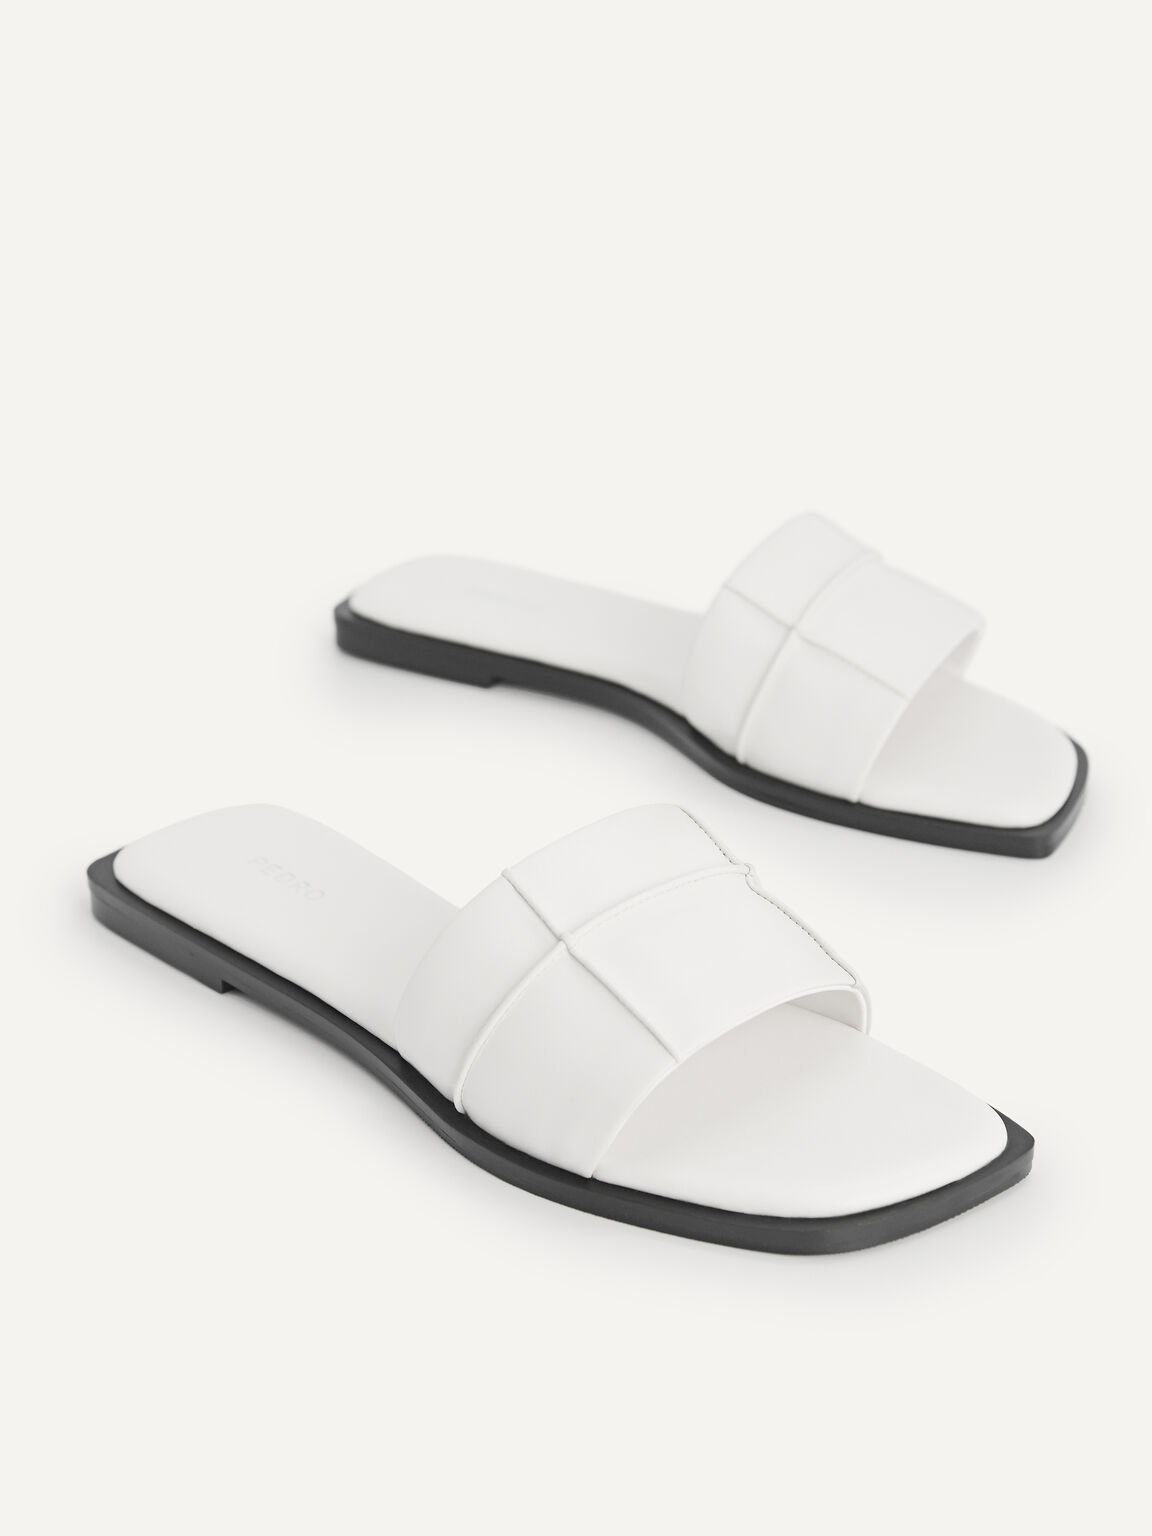 Slide Sandals, Chalk